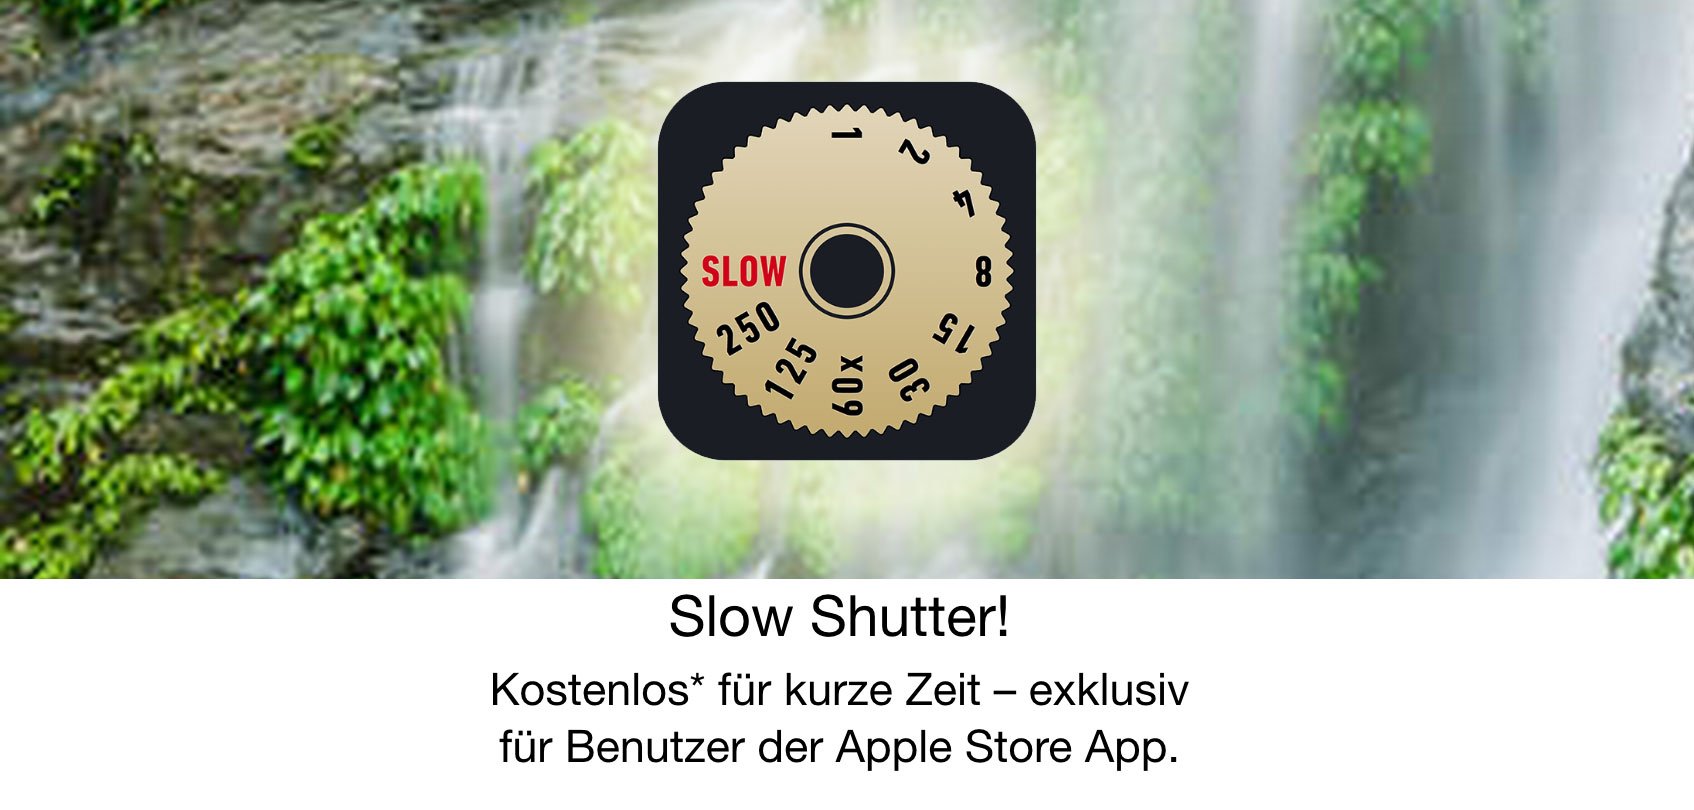 Slow Shutter! kostenlos über Apple Store App 1